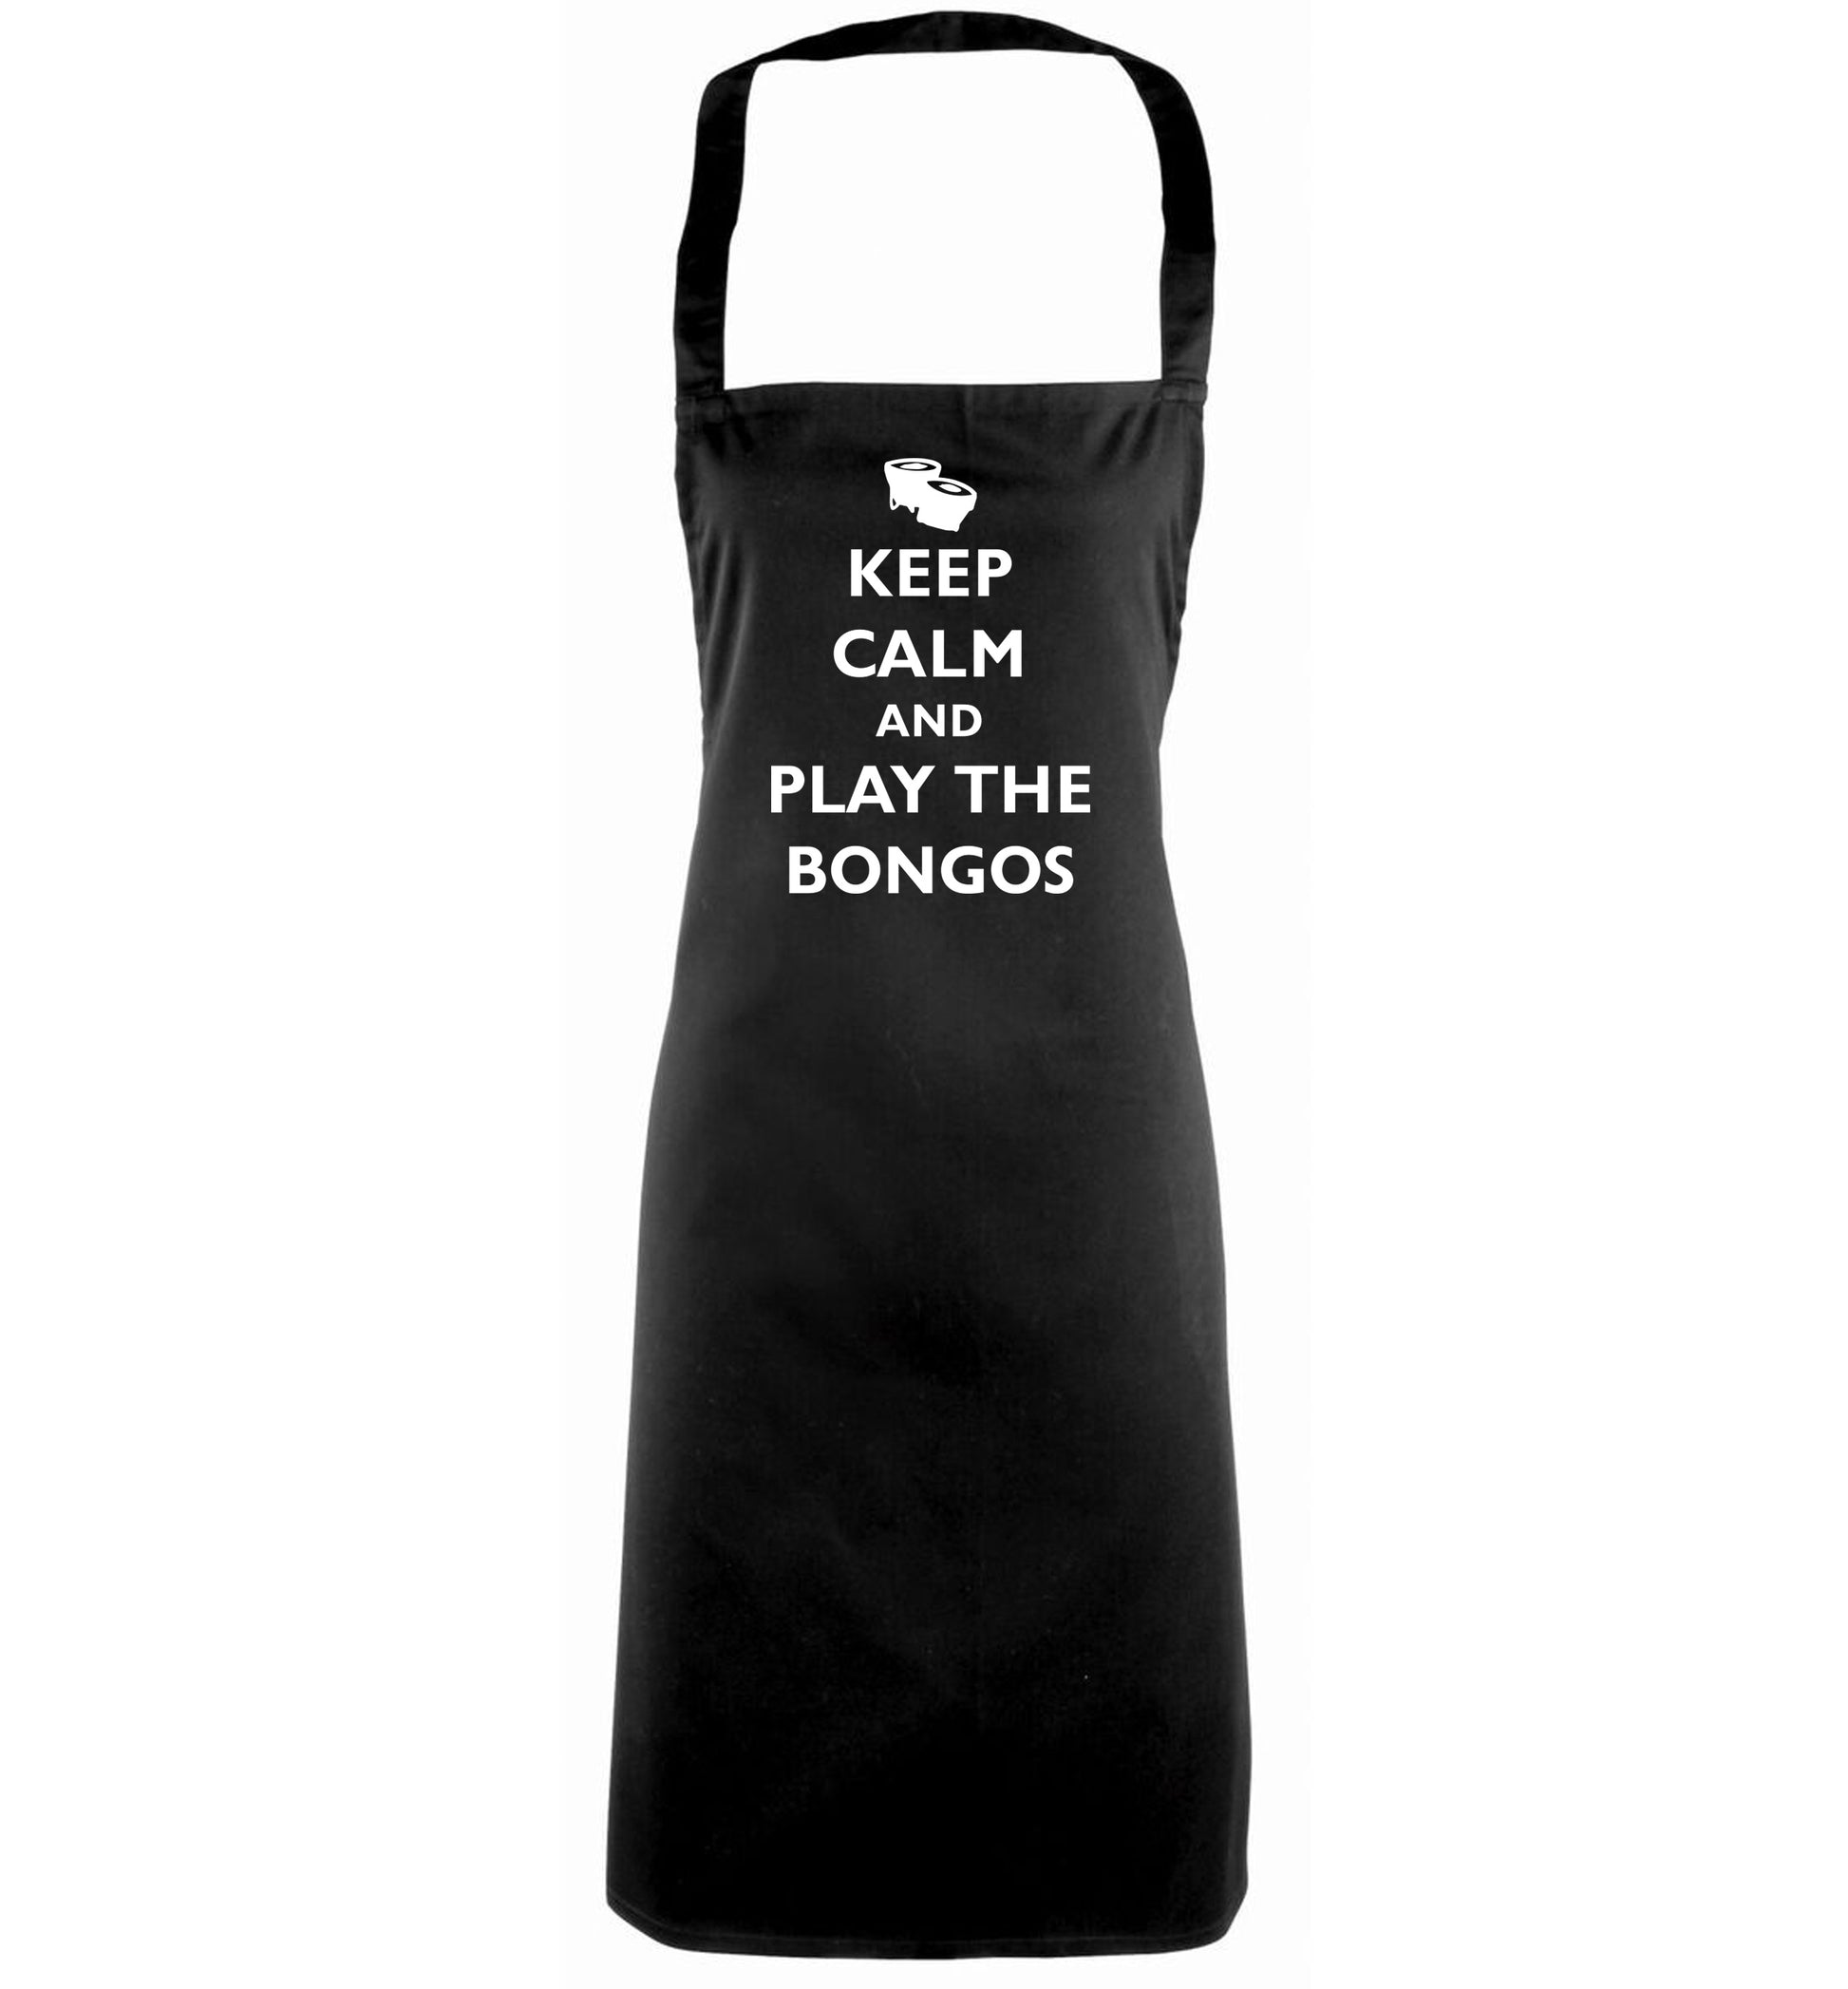 Keep calm and play the bongos black apron